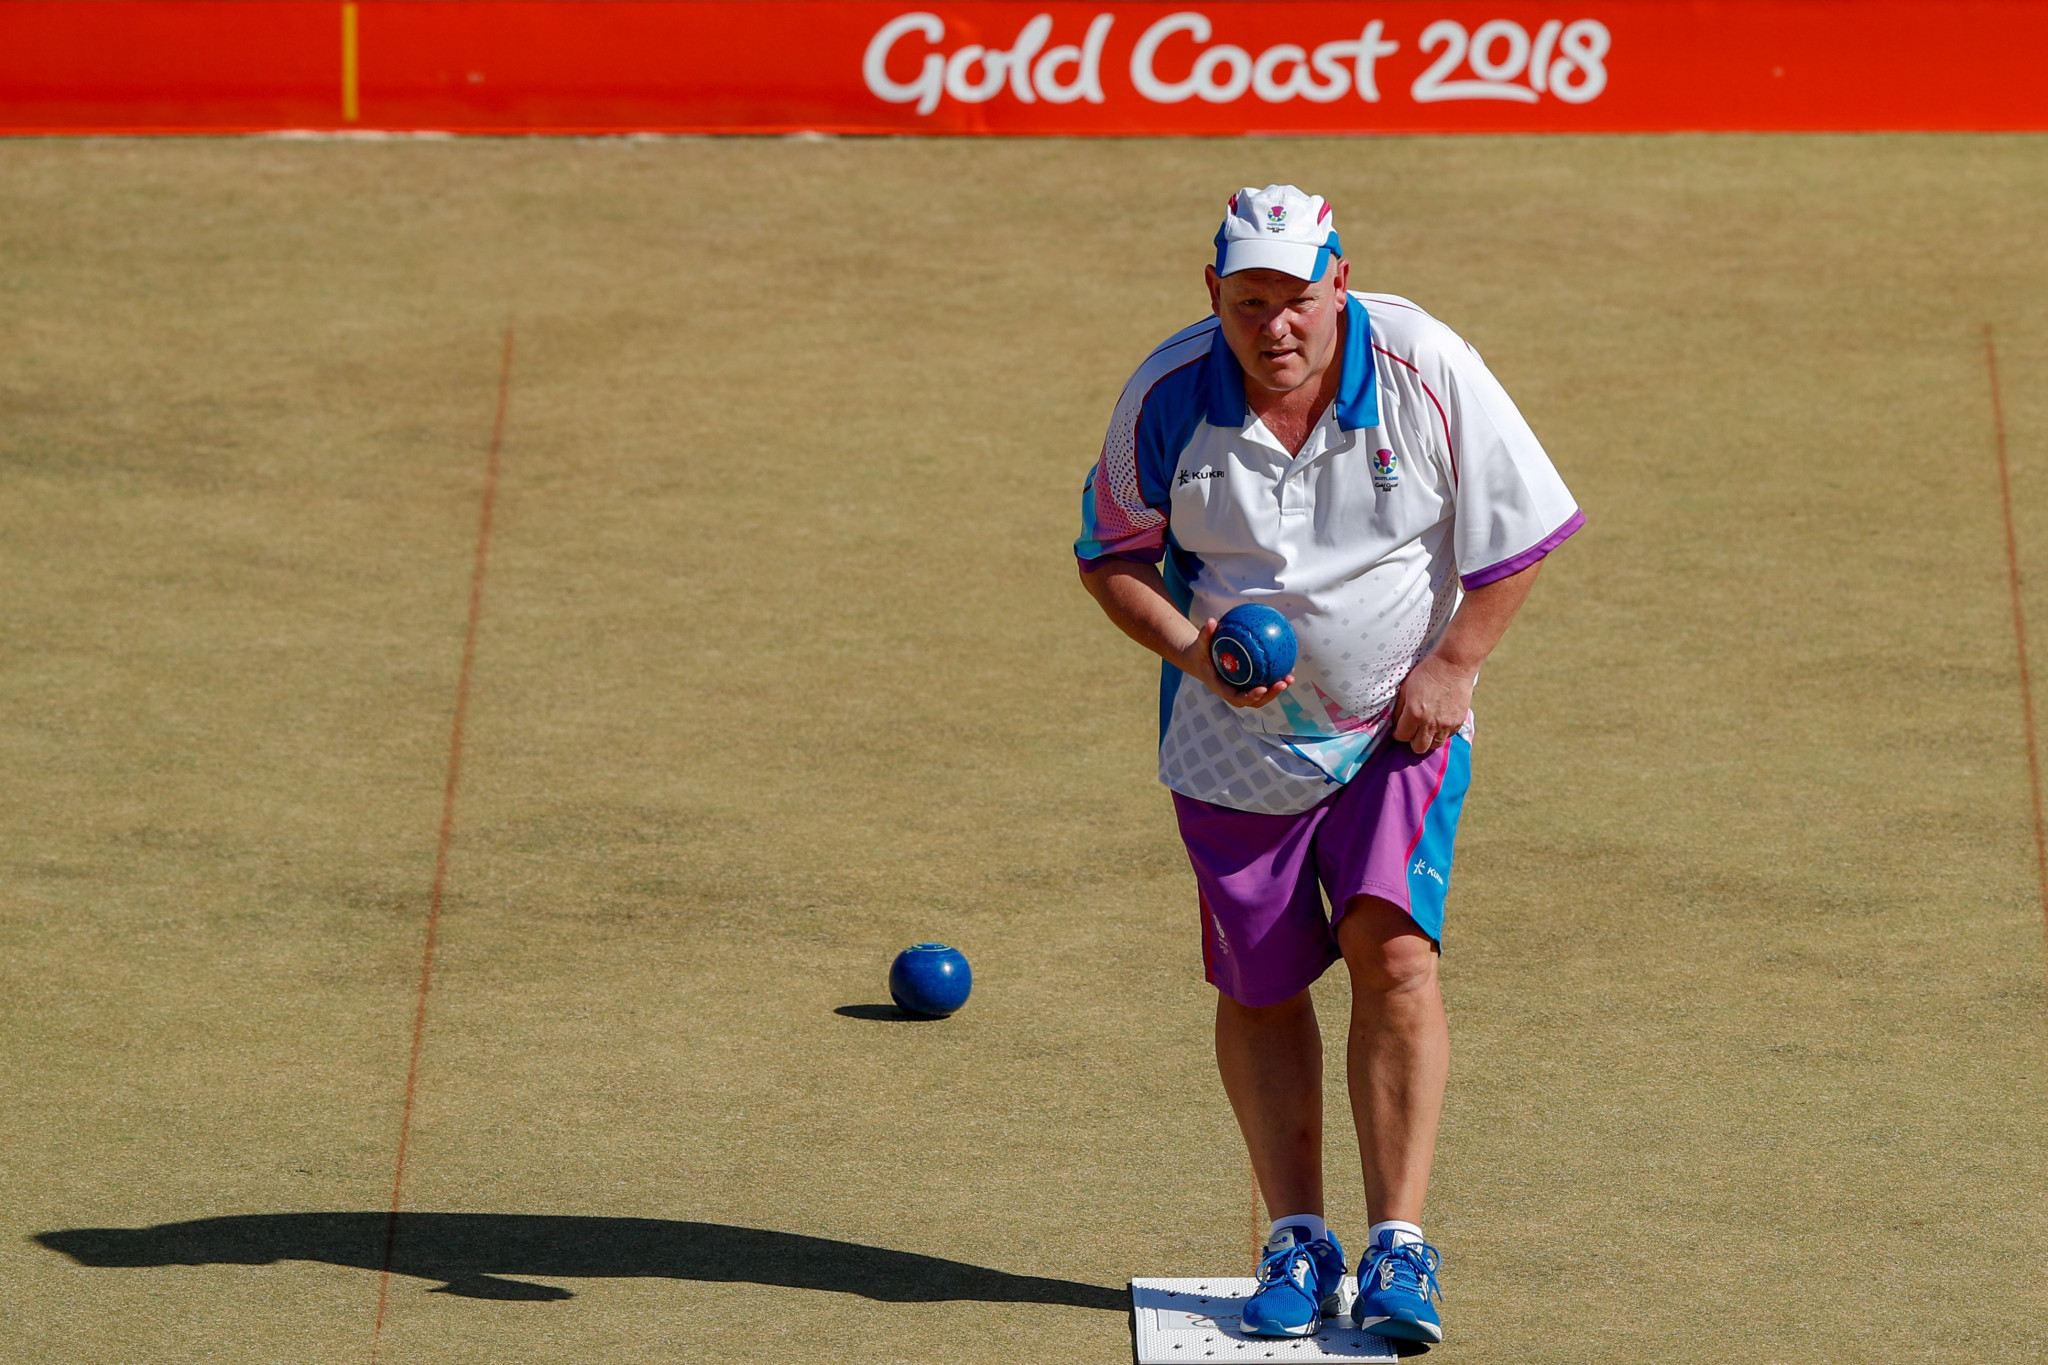 Marshall takes fifth Commonwealth Games lawn bowls gold as Scotland stun Australia